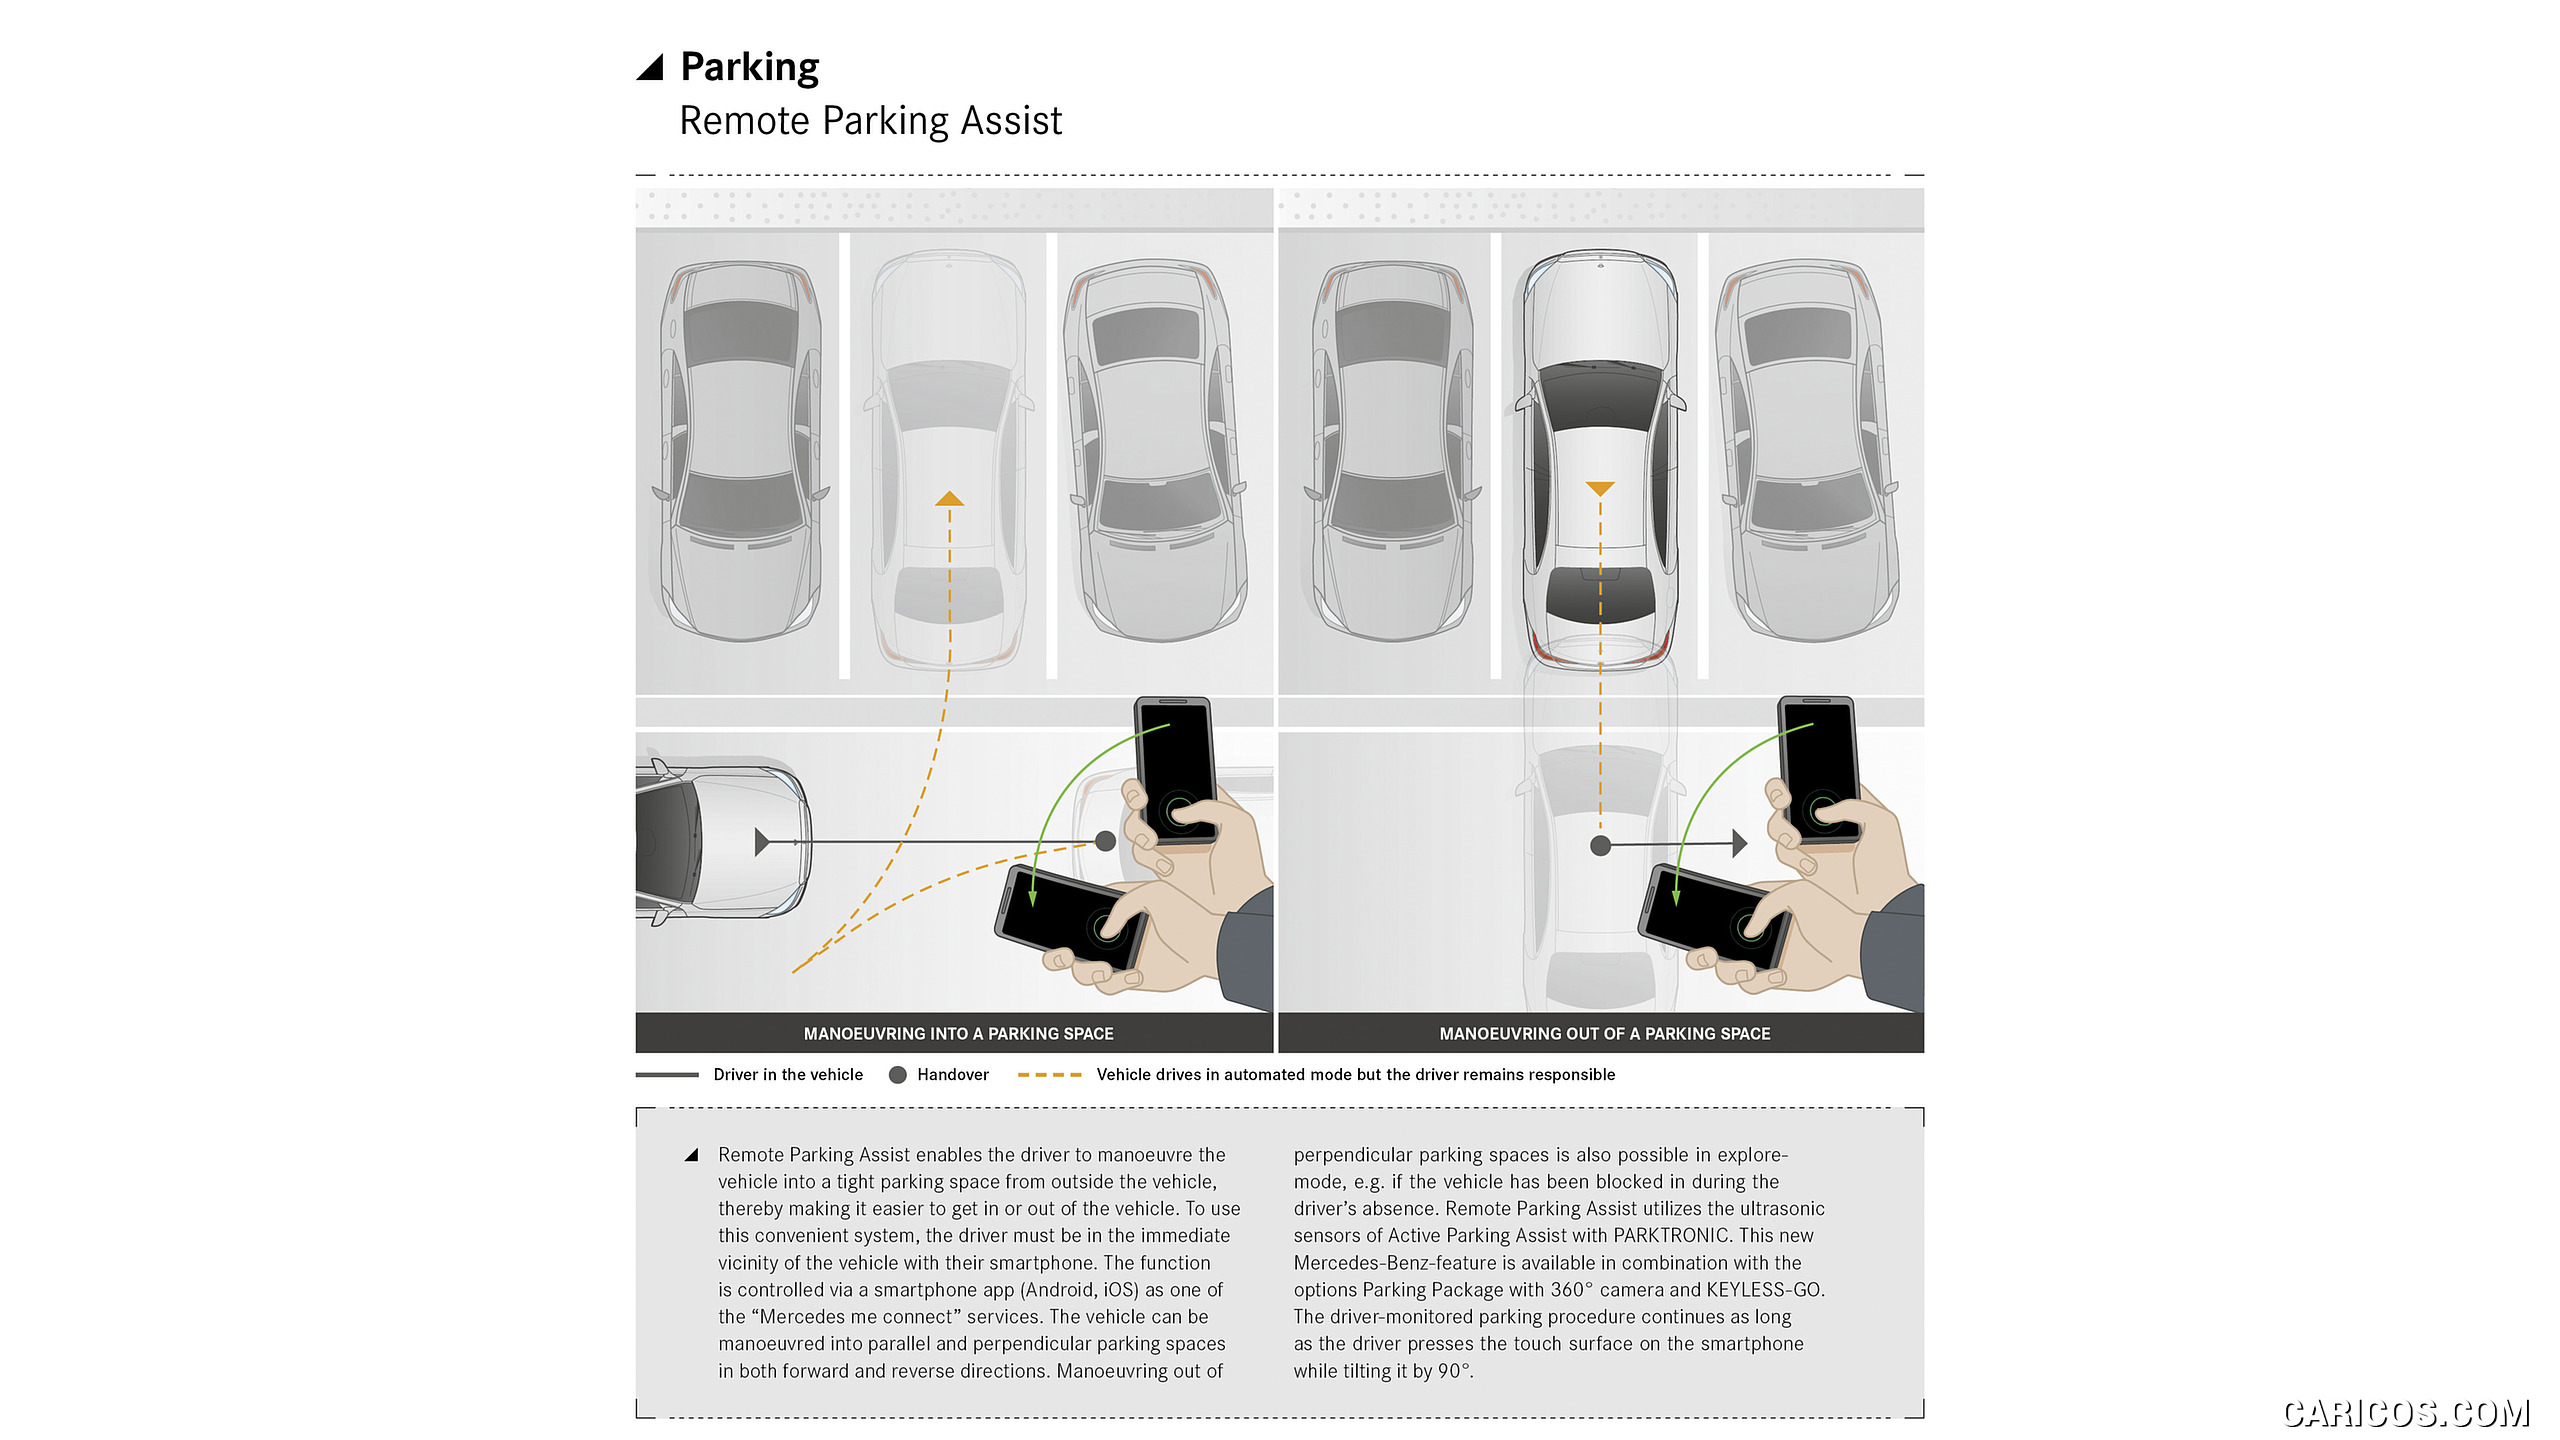 2021 Mercedes-Benz S-Class - Parking assistance: Remote Parking Assist, #208 of 316